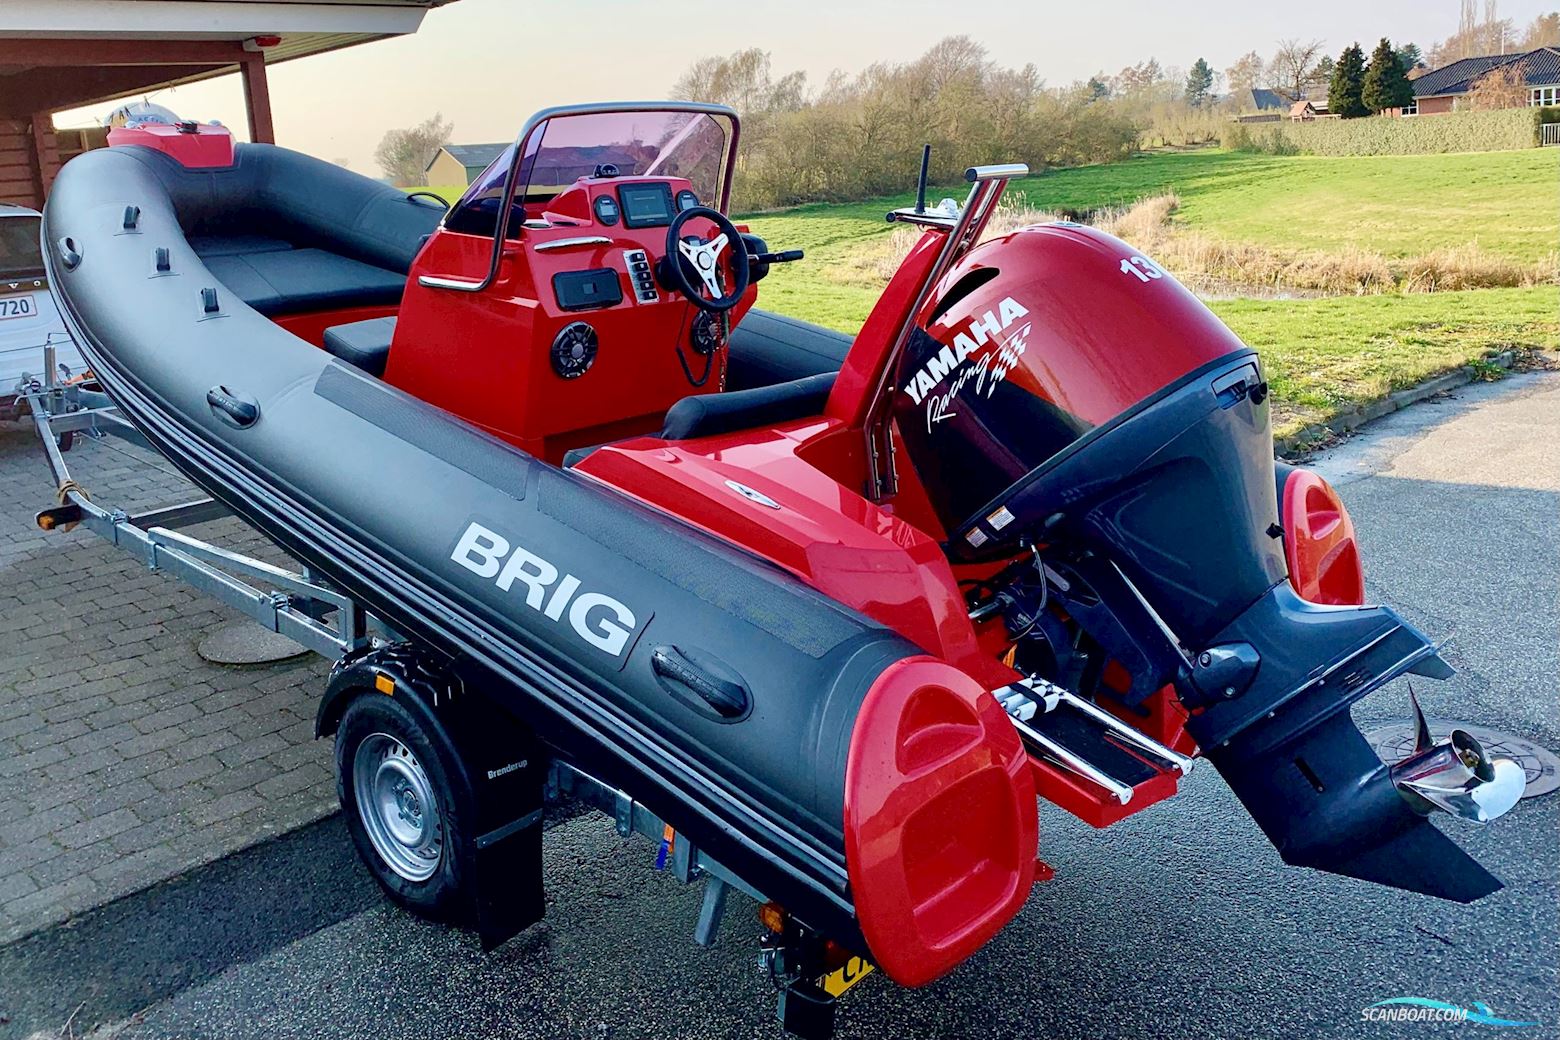 Brig E5 Eagle Luksus Rib Schlauchboot / Rib 2019, mit Yamaha F130Aetl motor, Dänemark